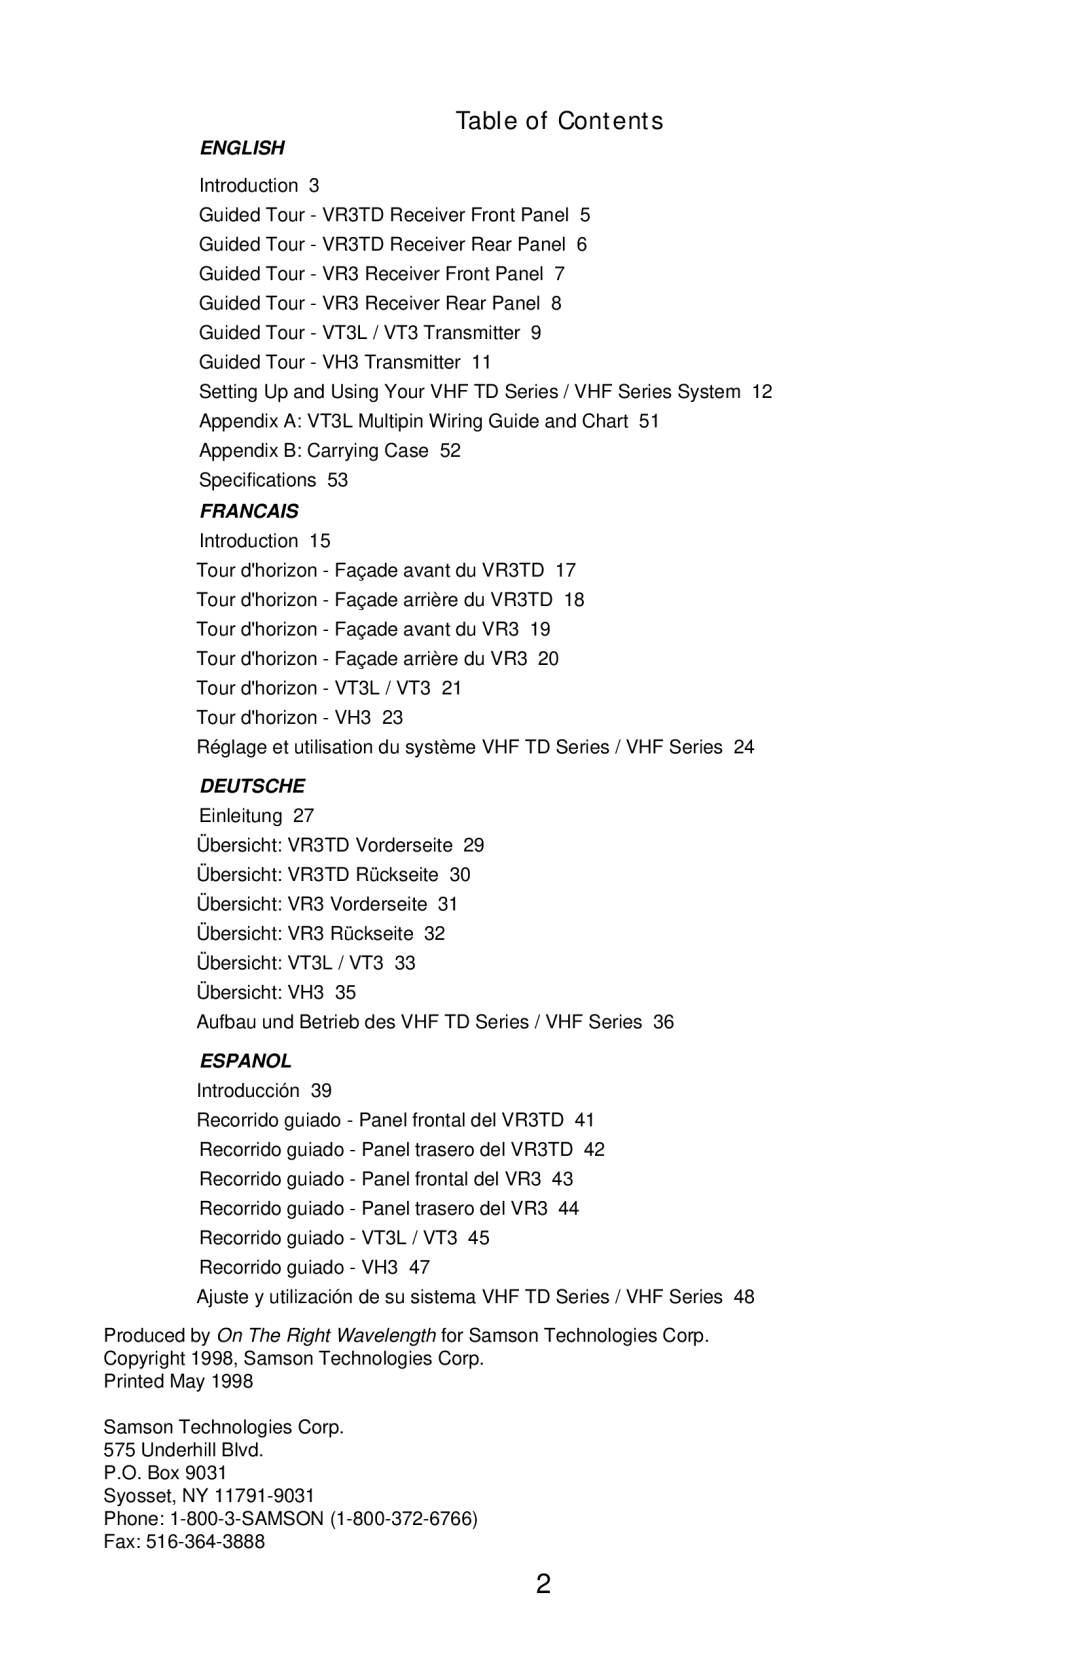 Samson VHF TD Series, VHF Series owner manual Table of Contents, English, Francais, Deutsche, Espanol 